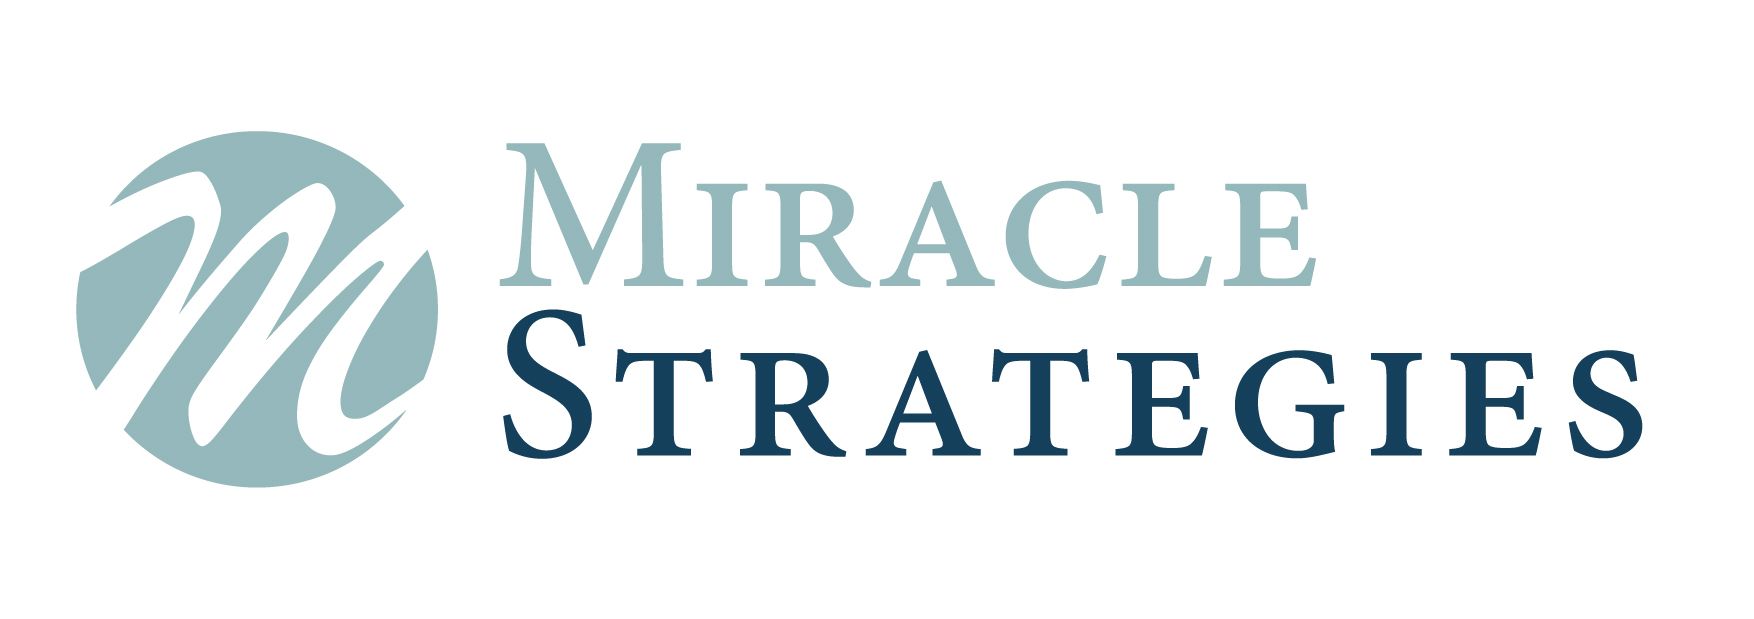 miraclestrategies Logo